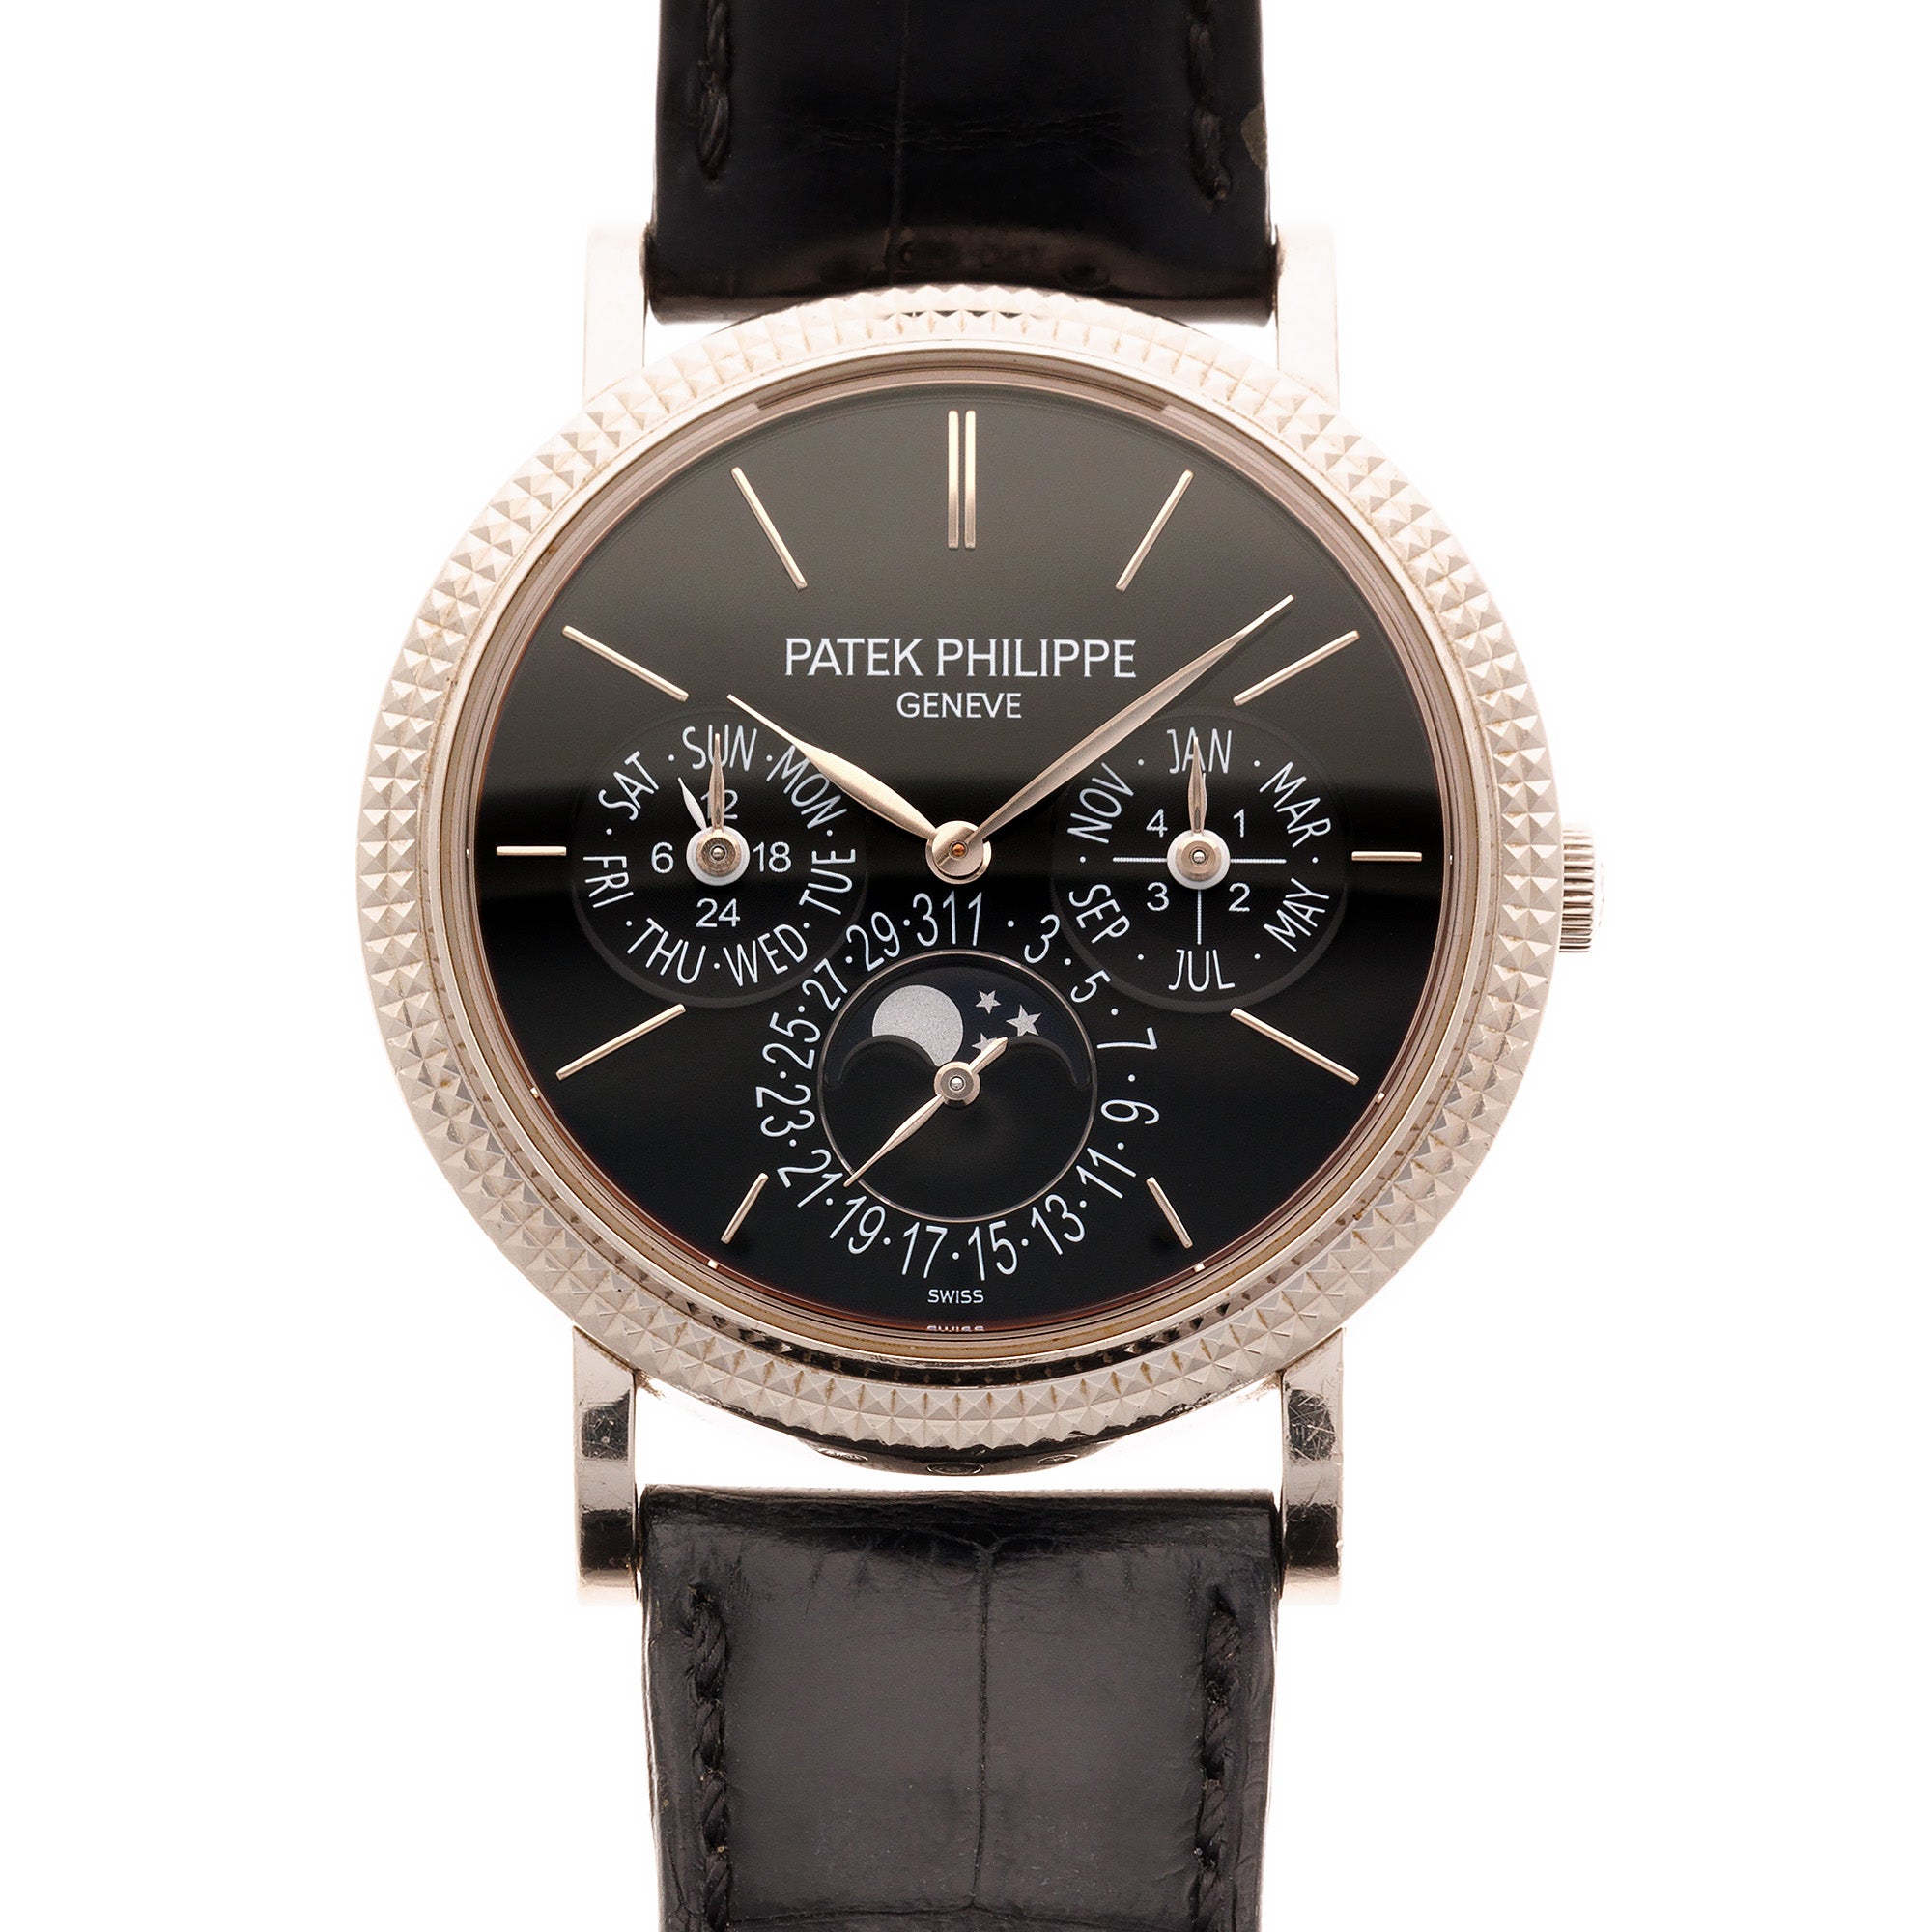 Patek Philippe - Patek Philippe White Gold Perpetual Calendar Watch Ref. 5139 - The Keystone Watches